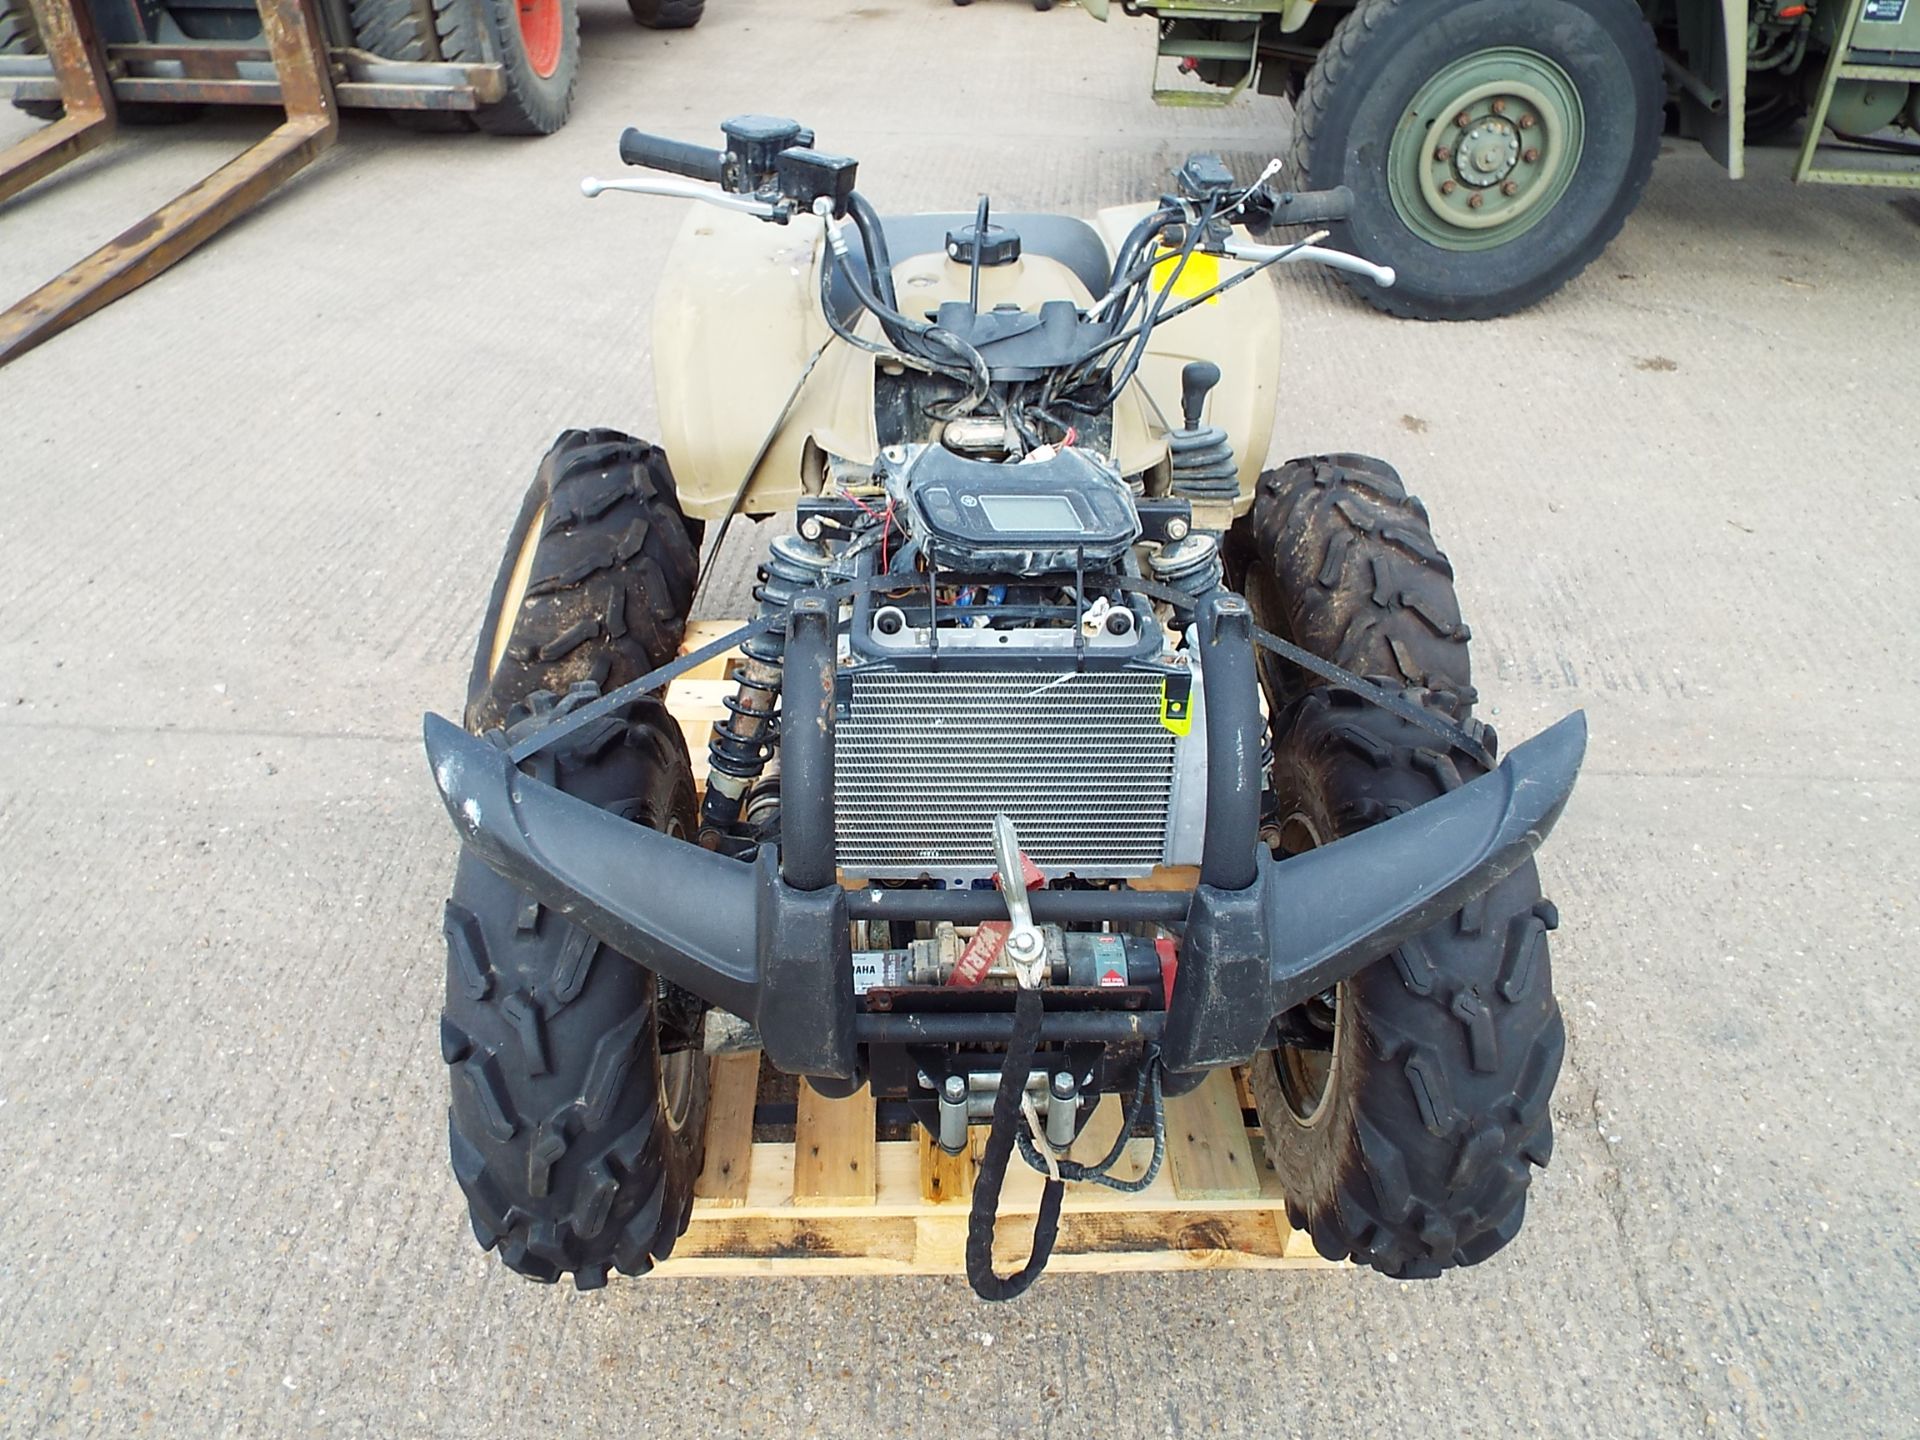 Military Specification Yamaha Grizzly 450 4 x 4 ATV Quad Bike with Winch - Bild 2 aus 19